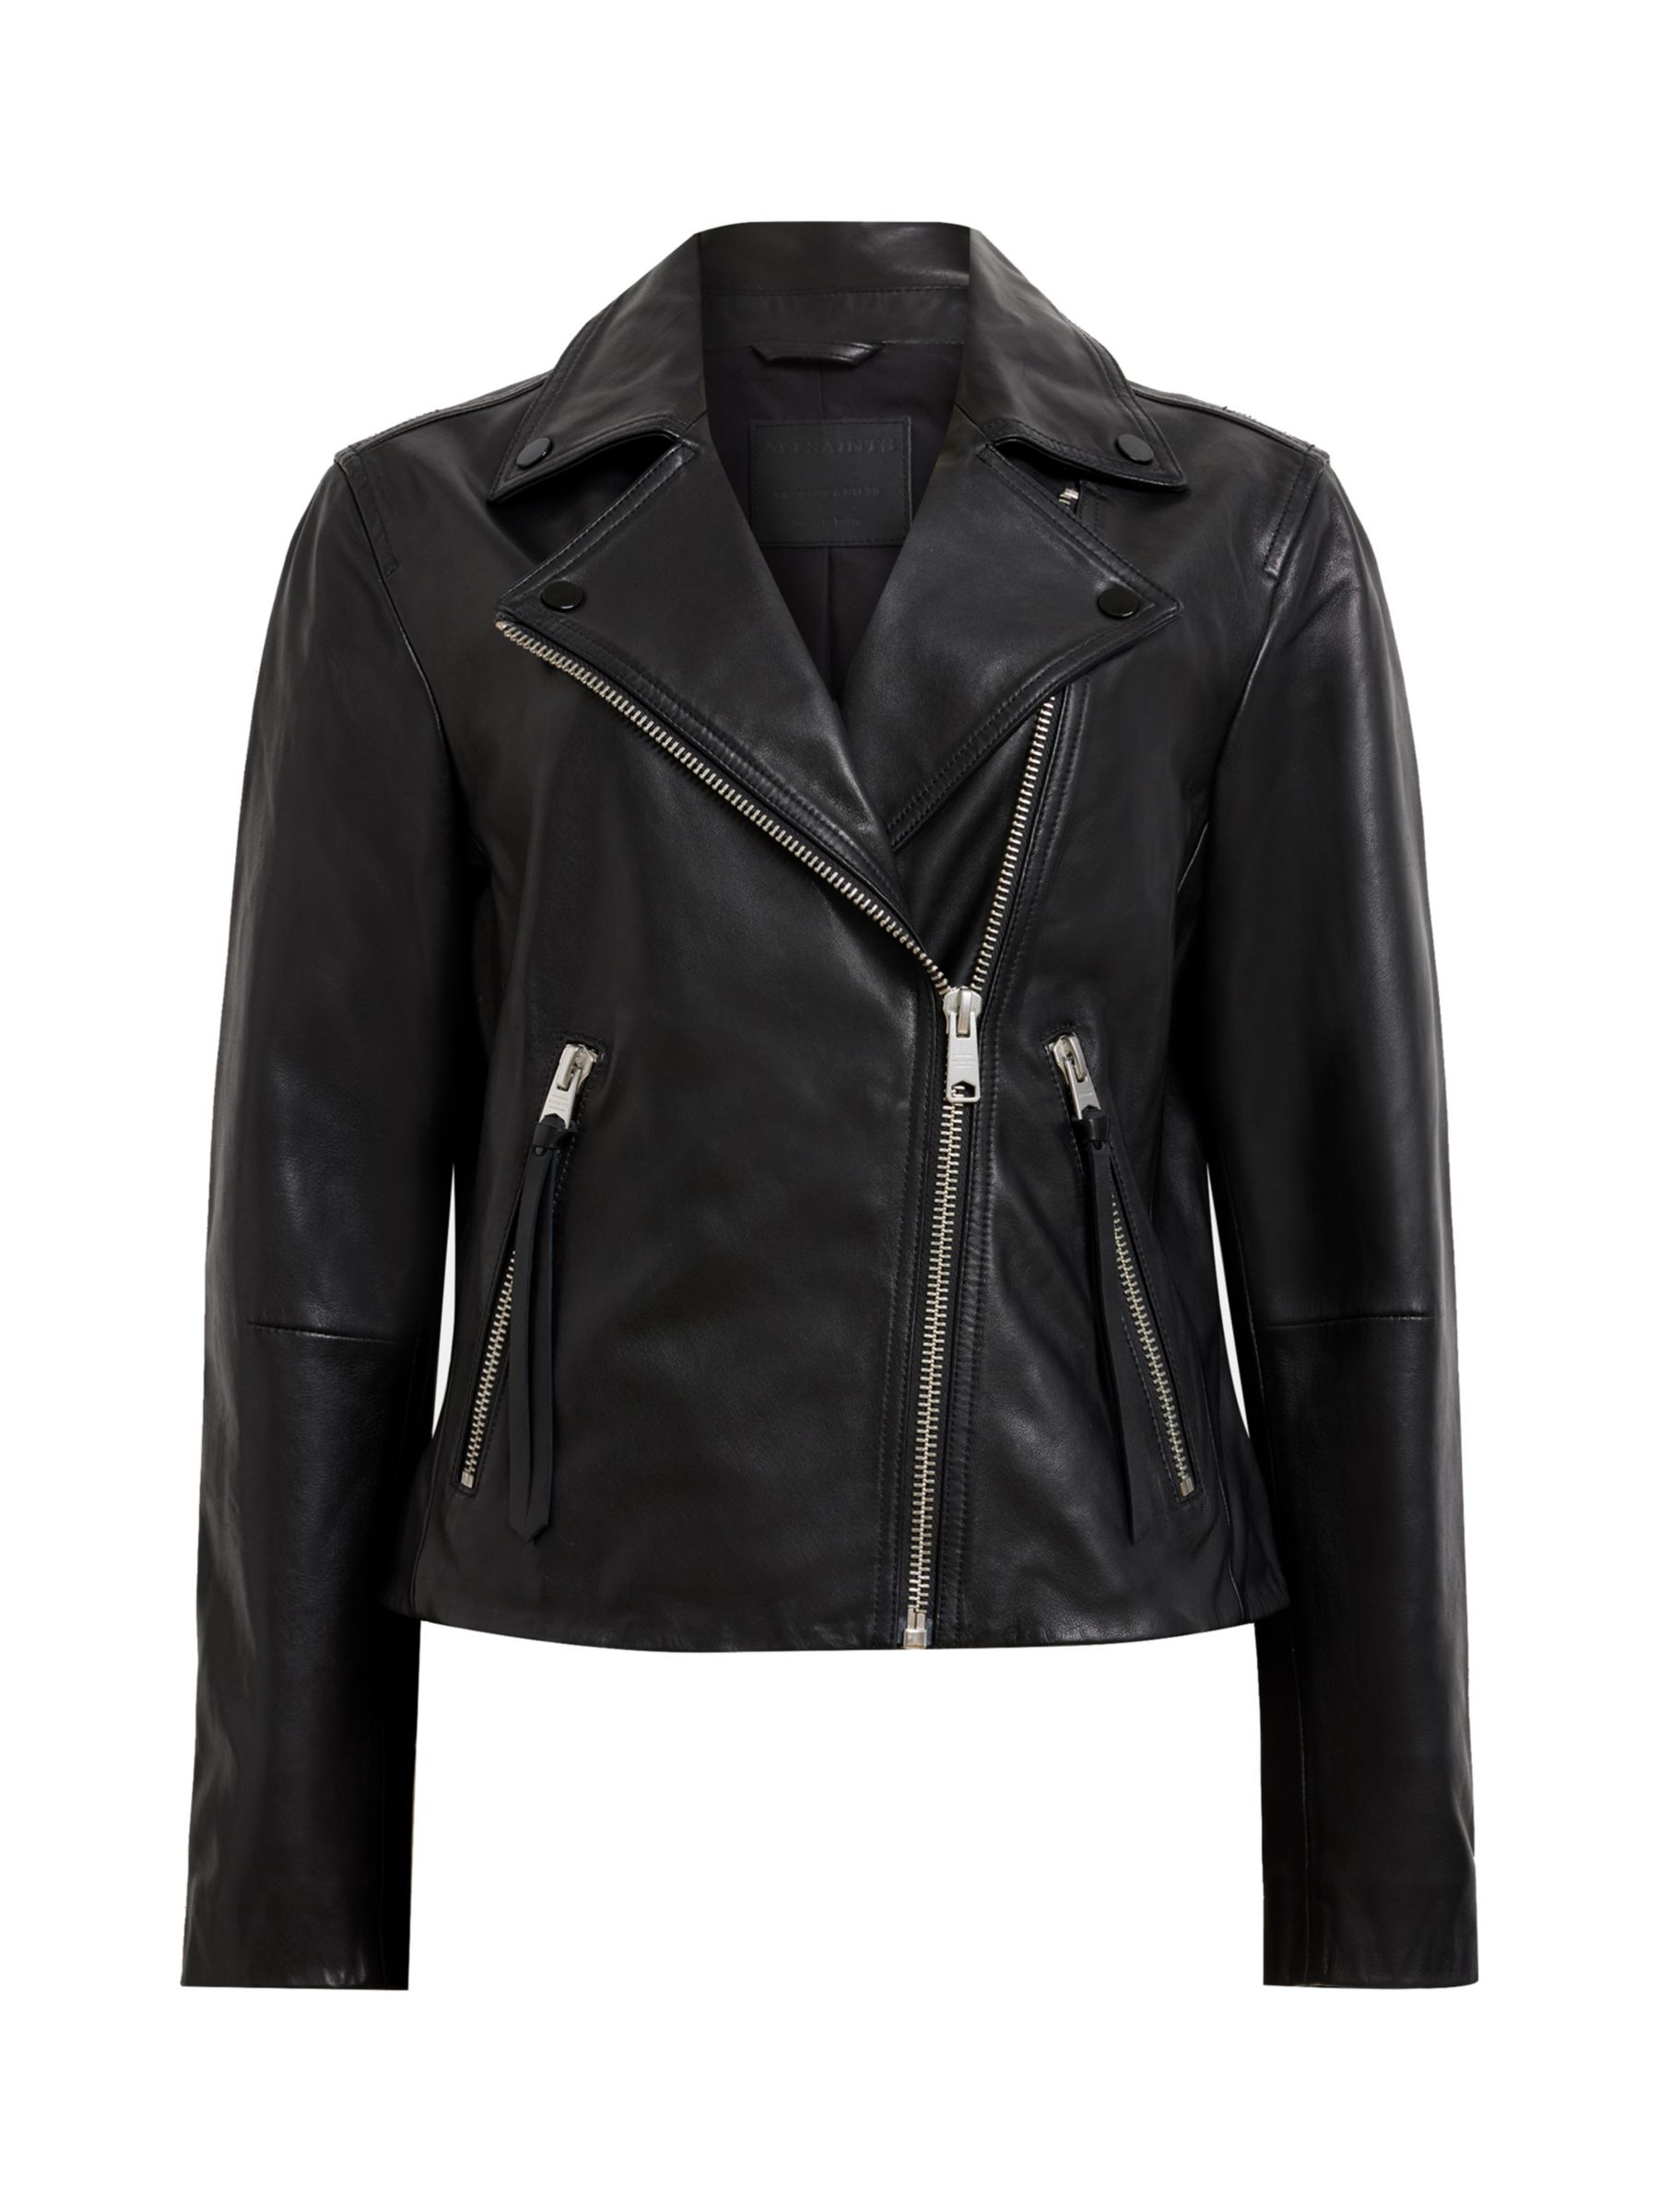 AllSaints Dalby Leather Biker Jacket, Black at John Lewis & Partners